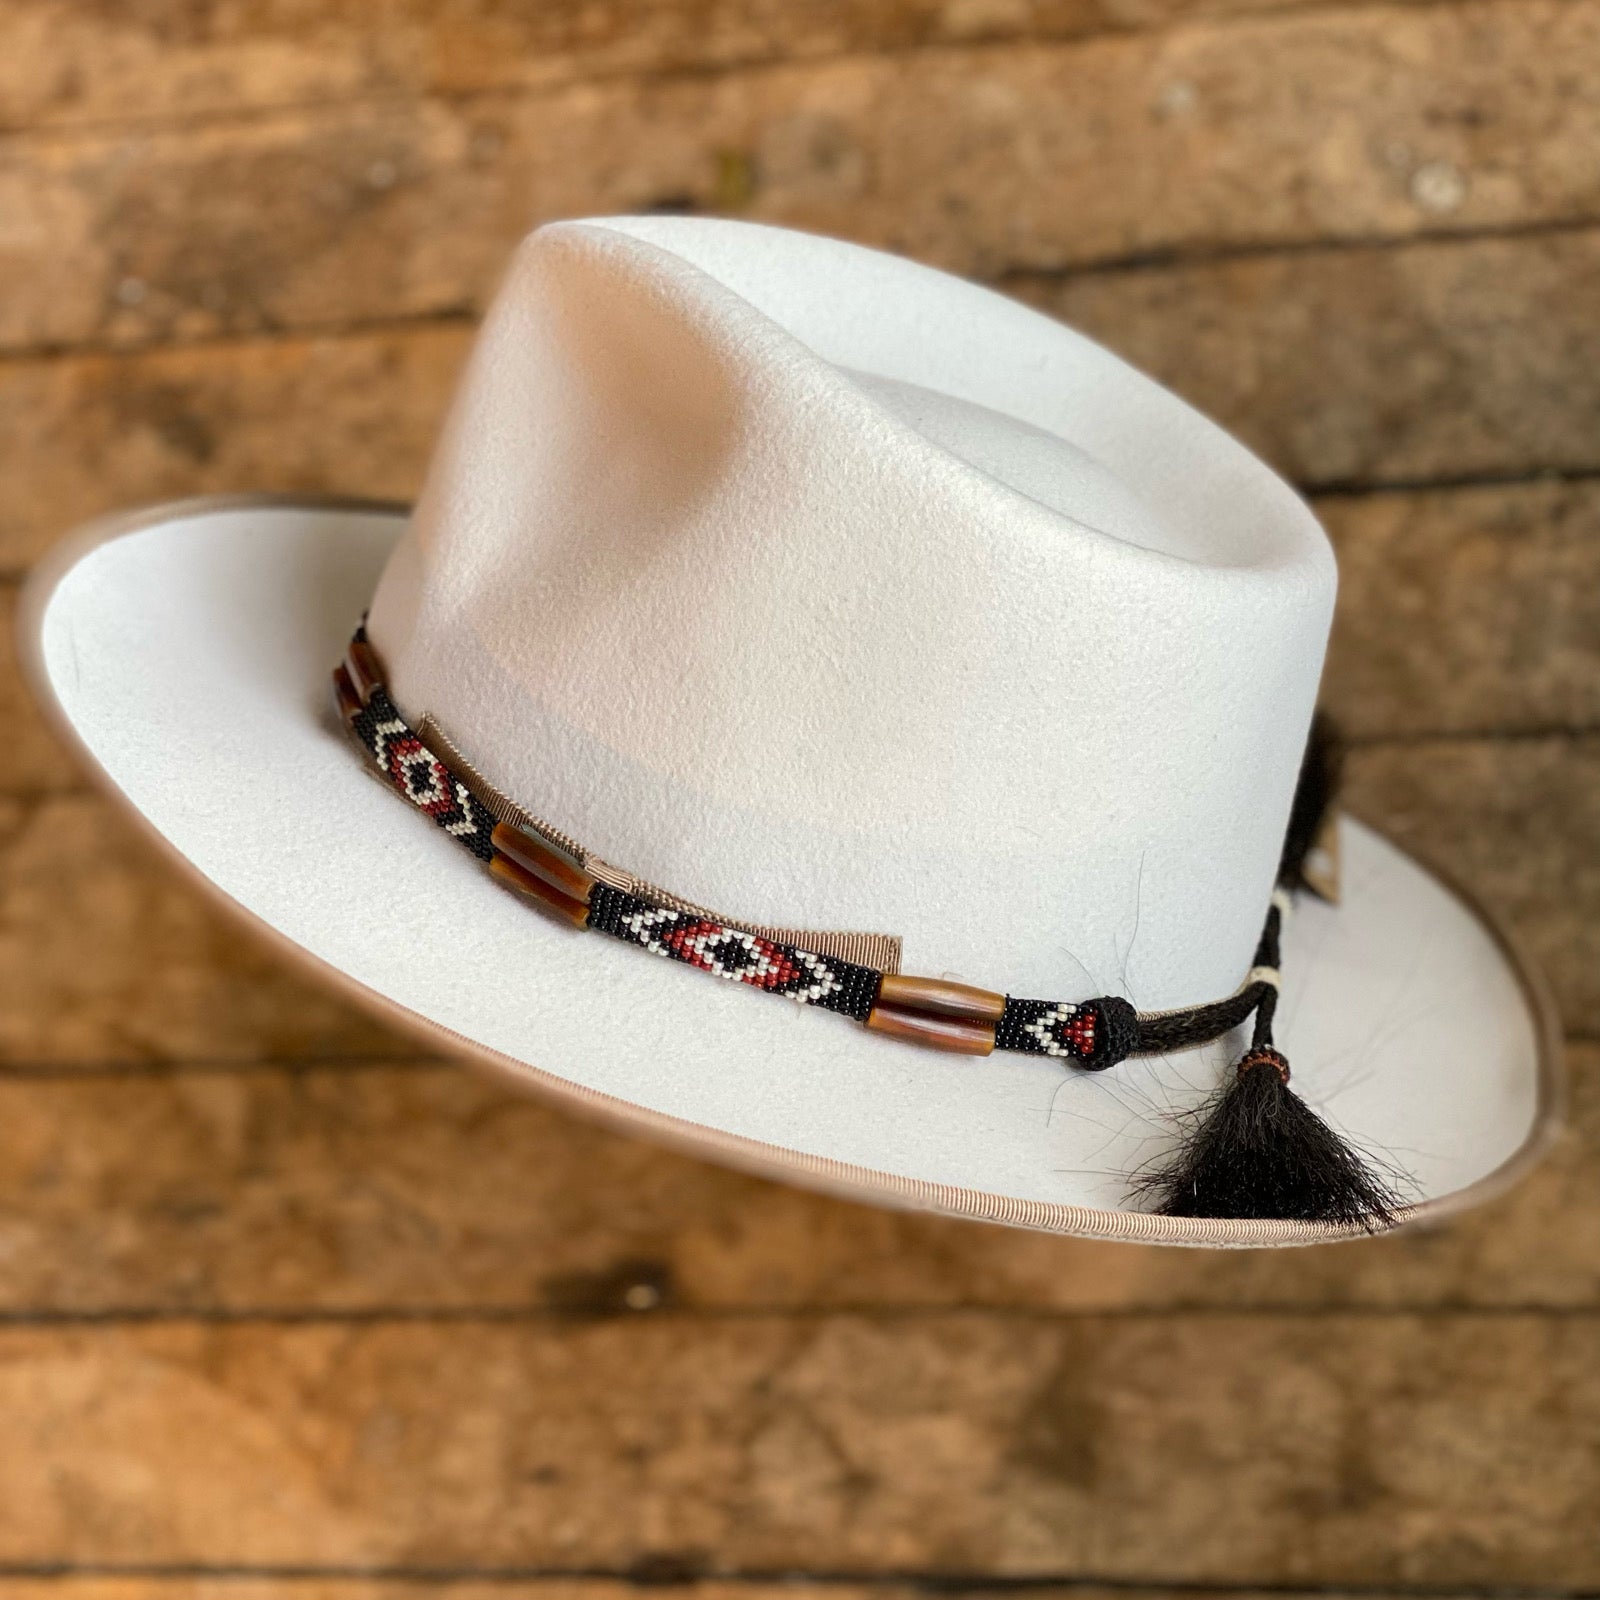 Cowboy Hat Bands, Hat Bands for Cowboy Hats